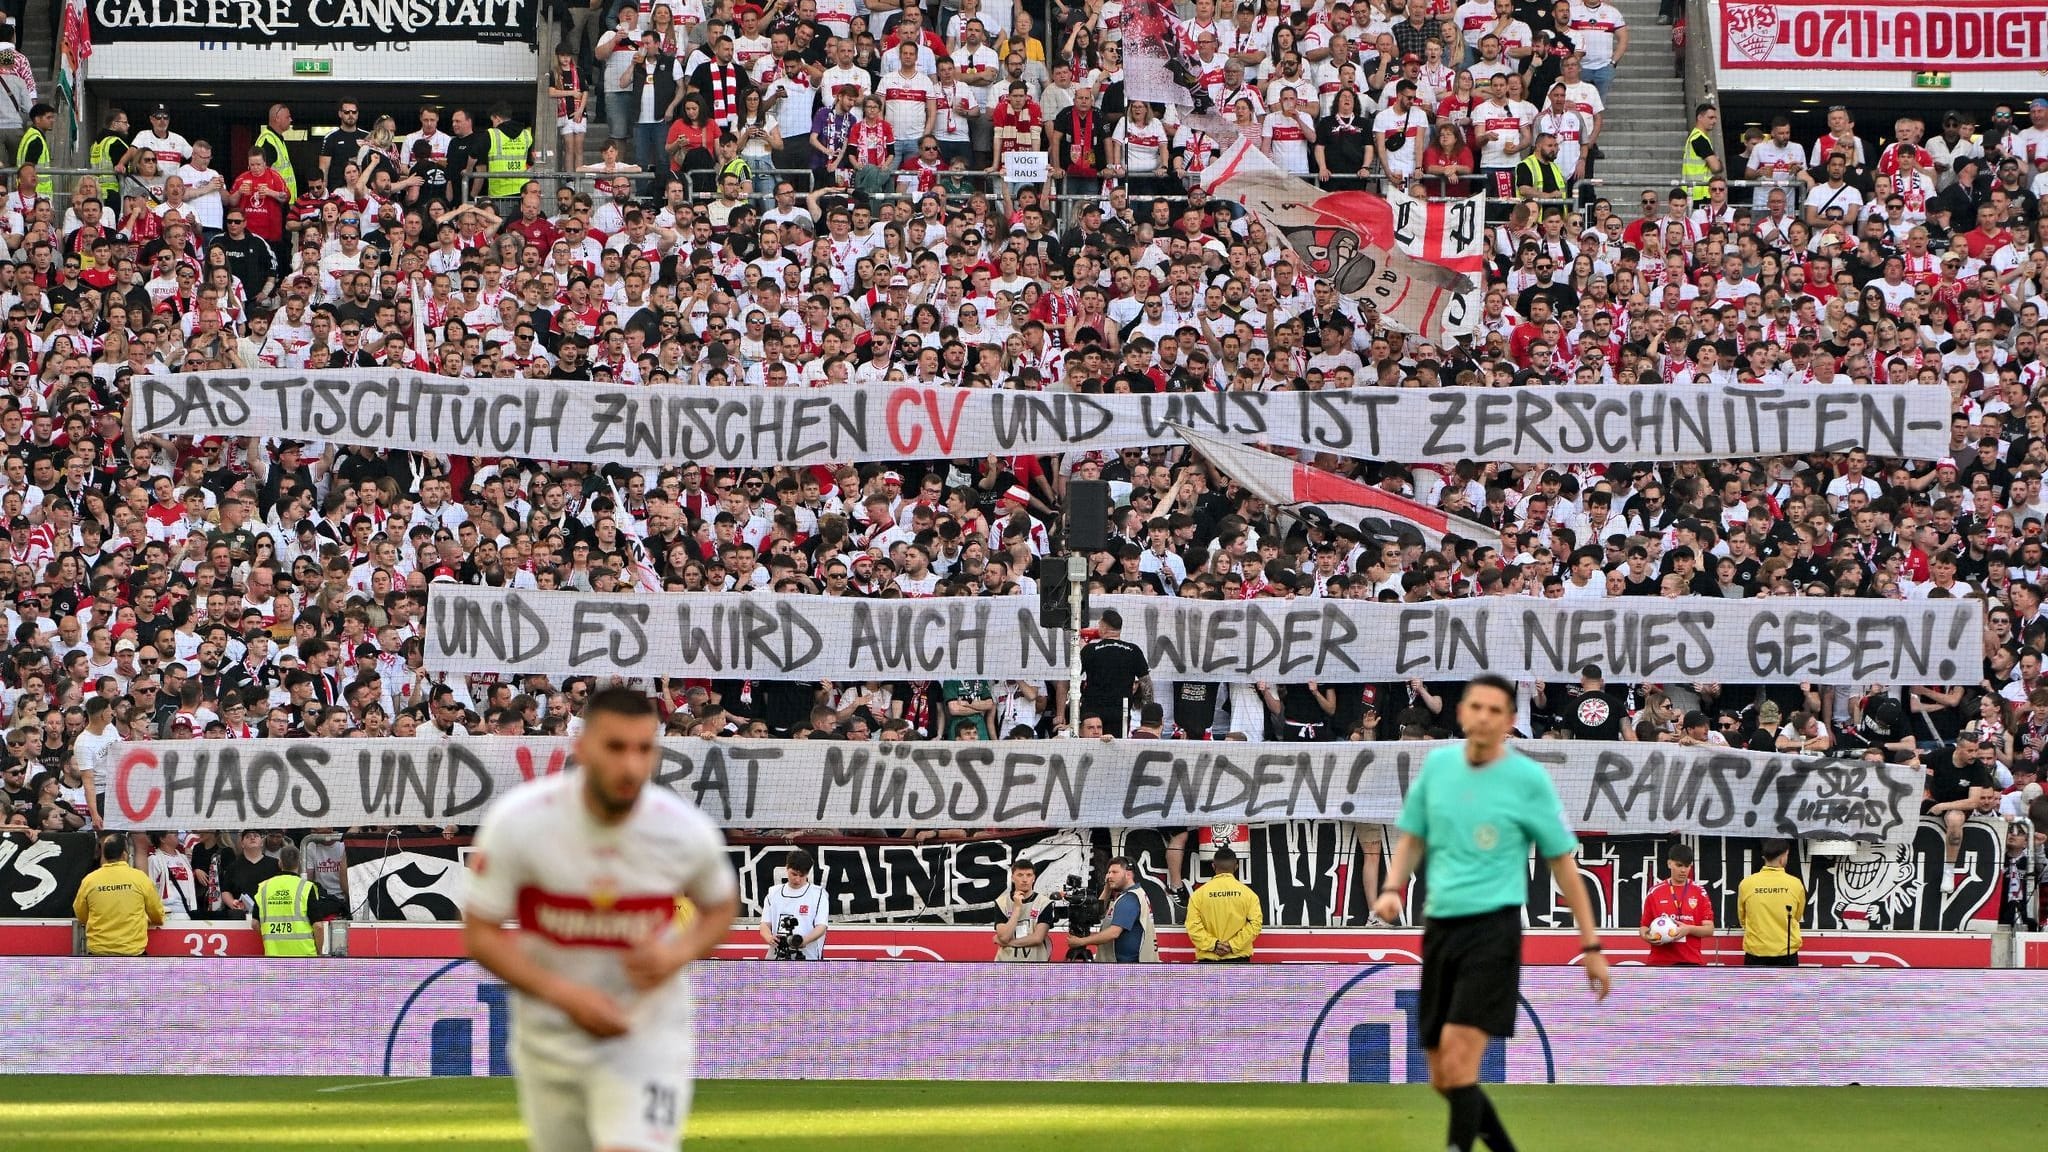 VfB-Fans protestieren erneut gegen eskalierten Machtkampf